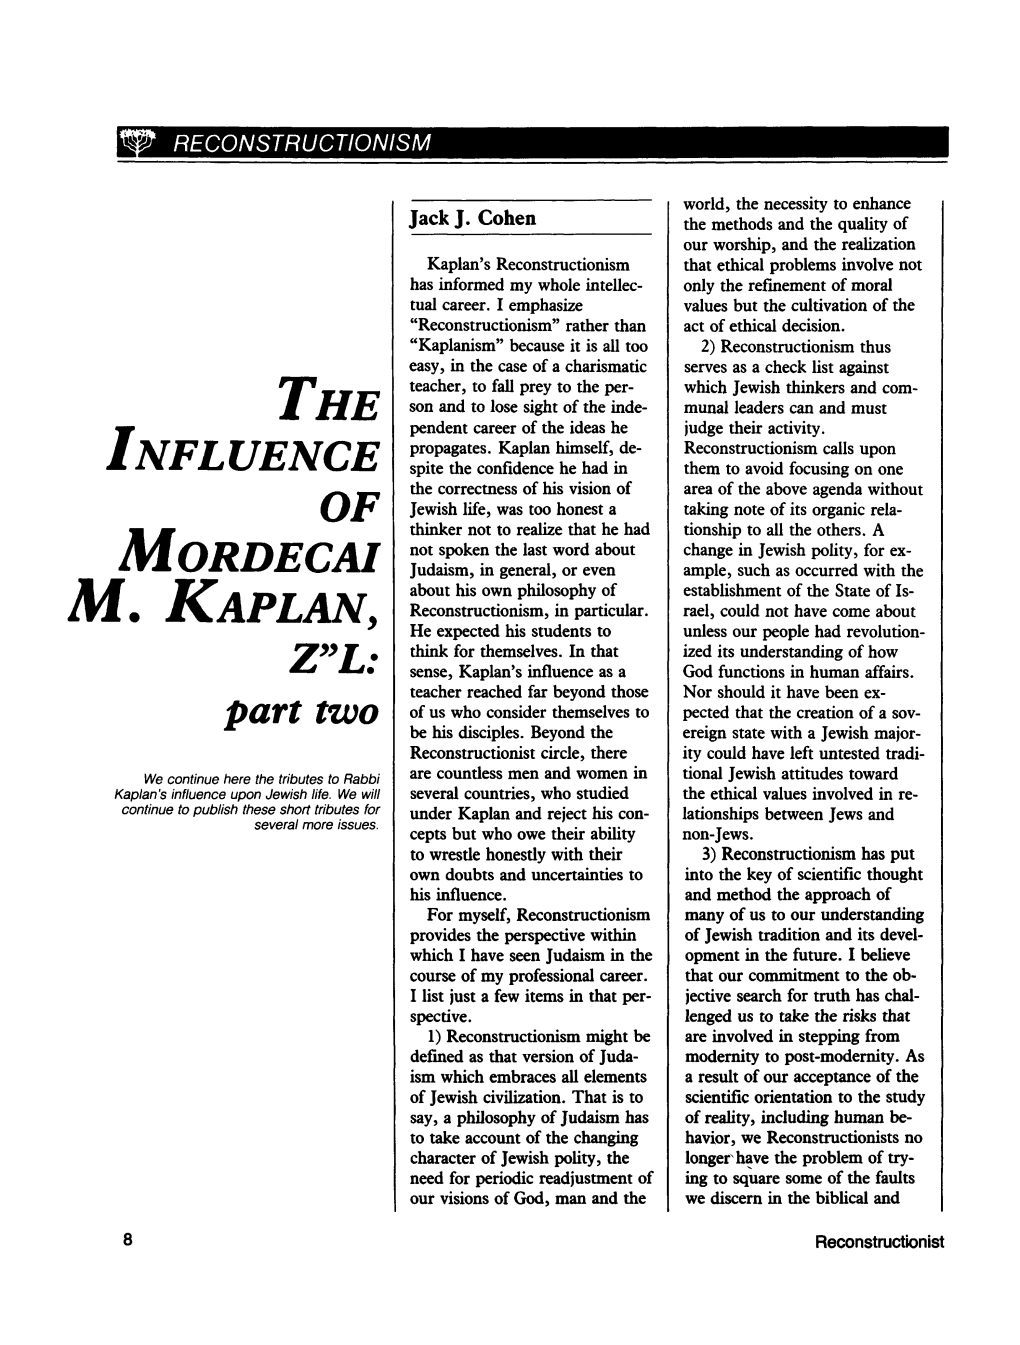 The Influence of Mordecai M. Kaplan